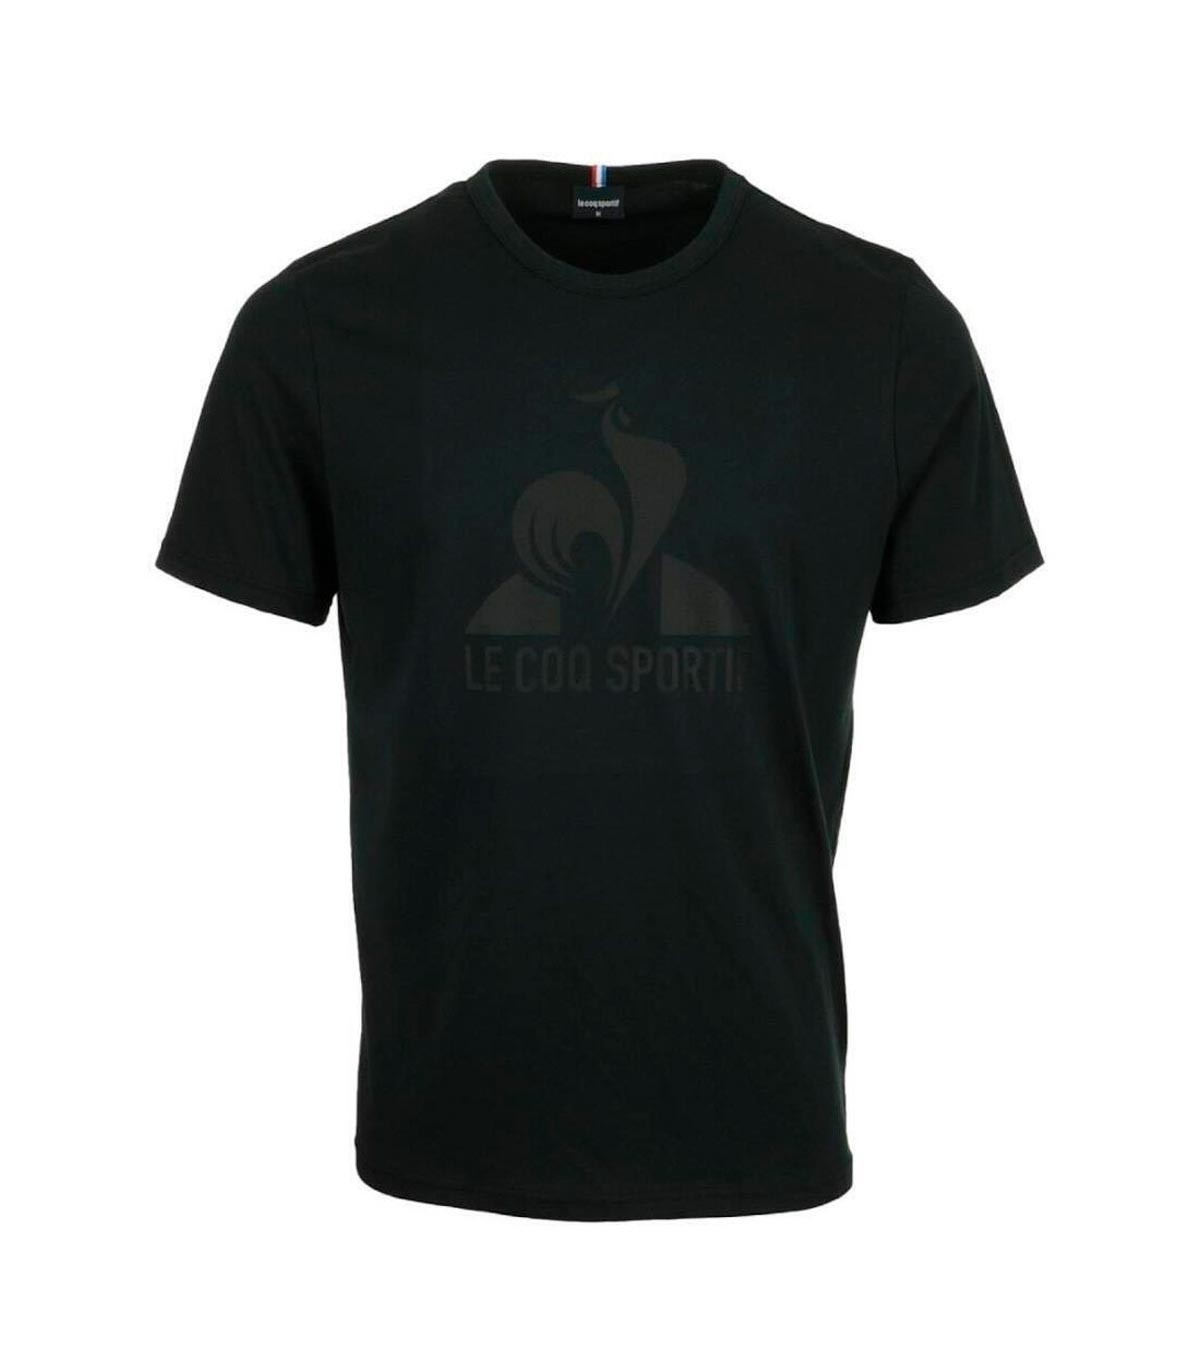 Le Coq Sportif - Camiseta Monochrome - Negro